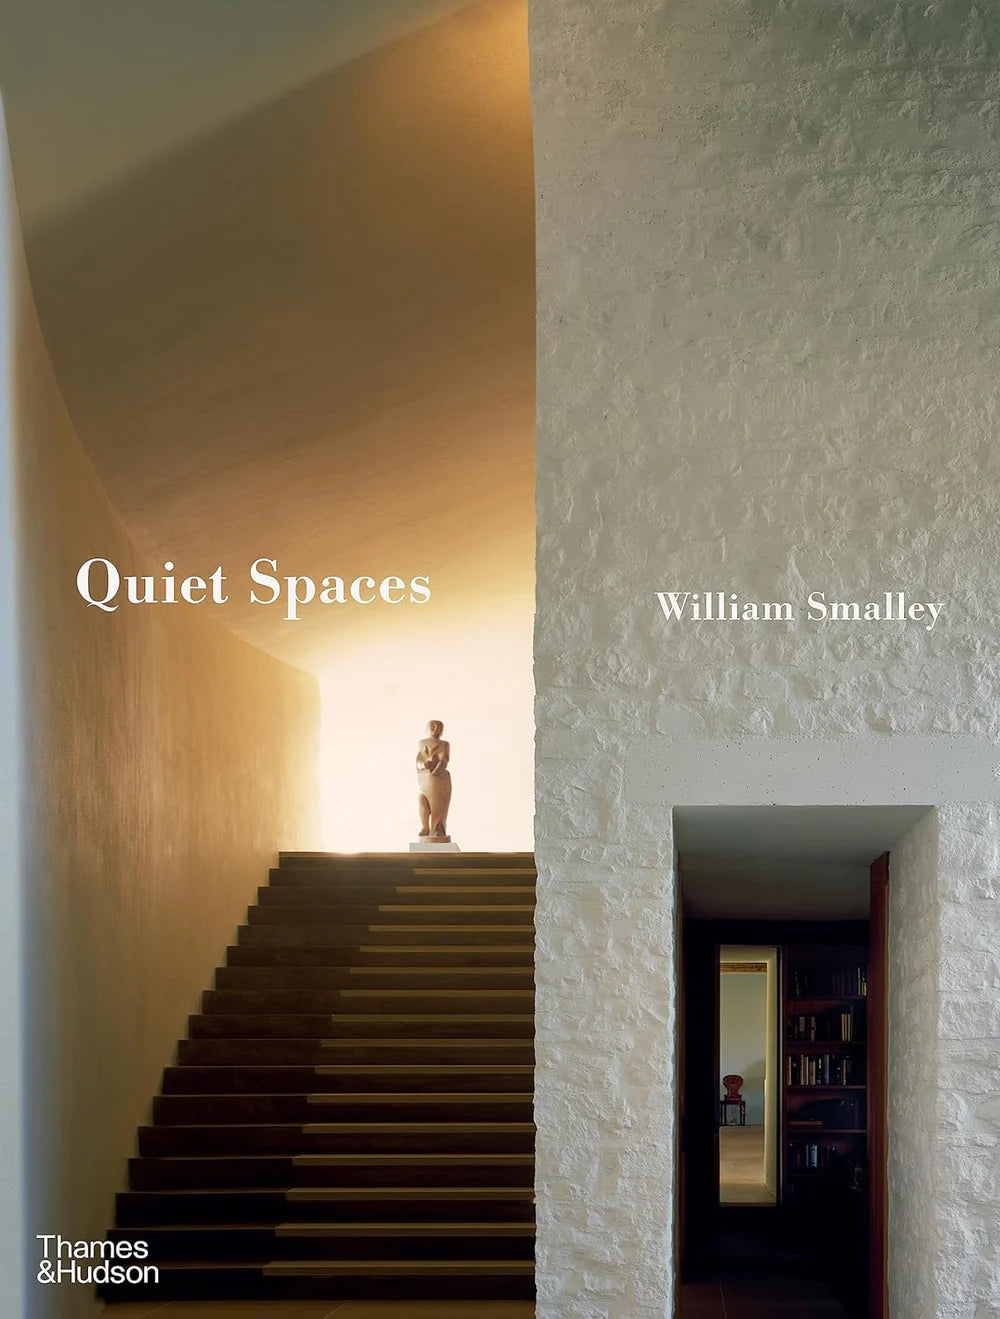 Quiet Spaces by William Smalley